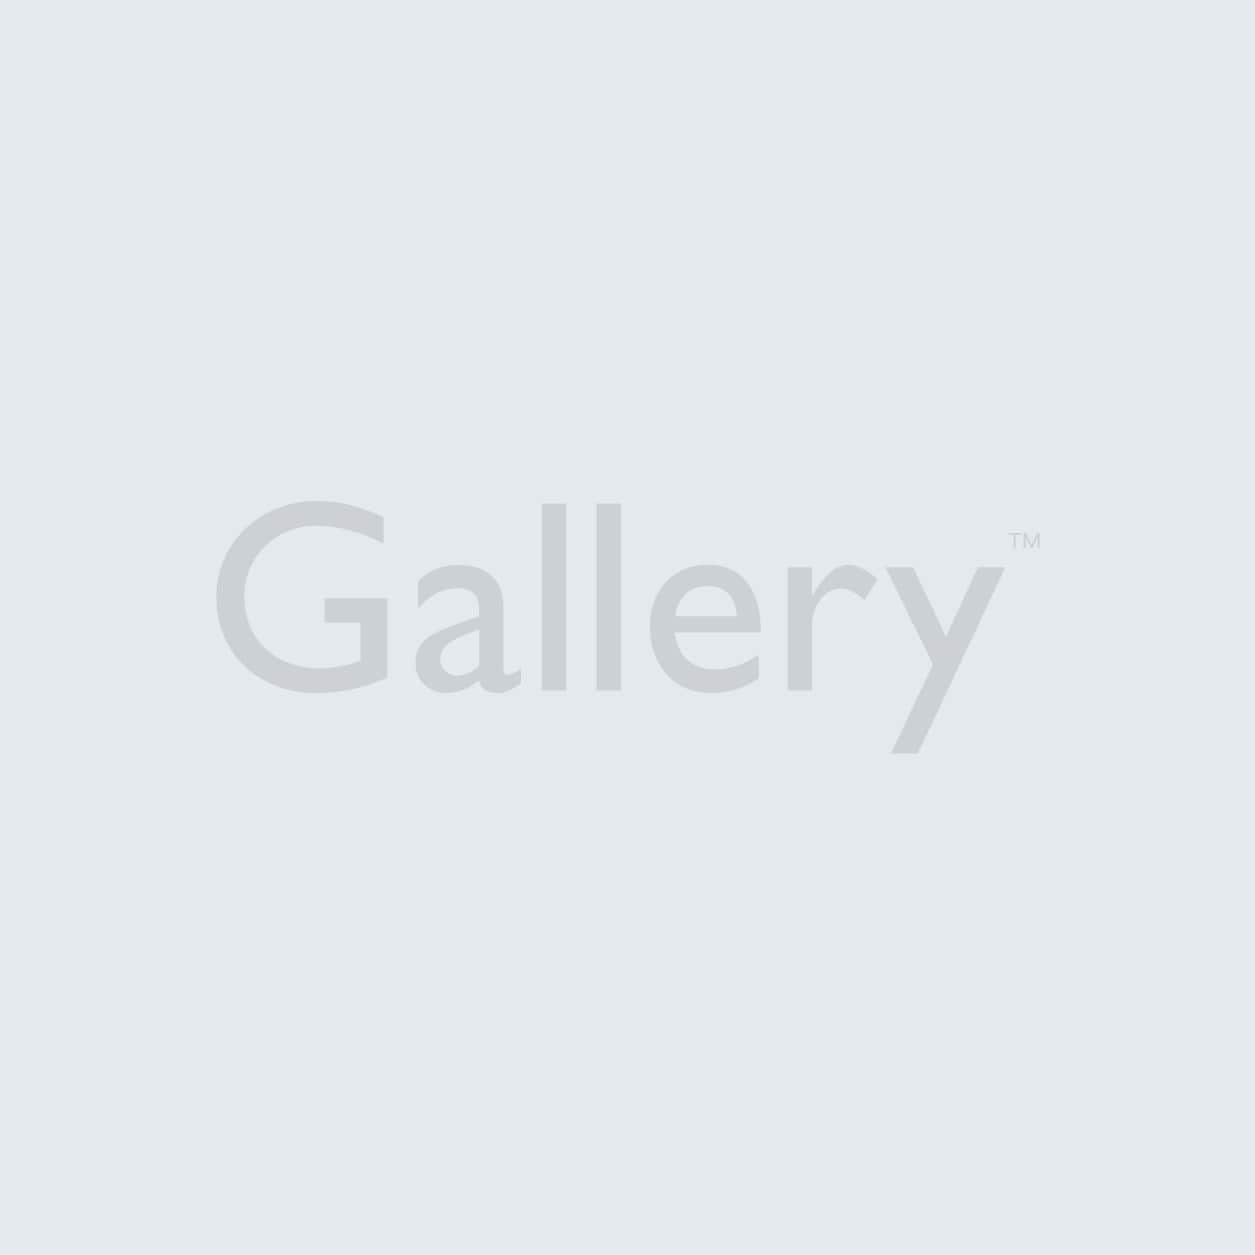 Astley Dining Table Oak 1600x900x750mm